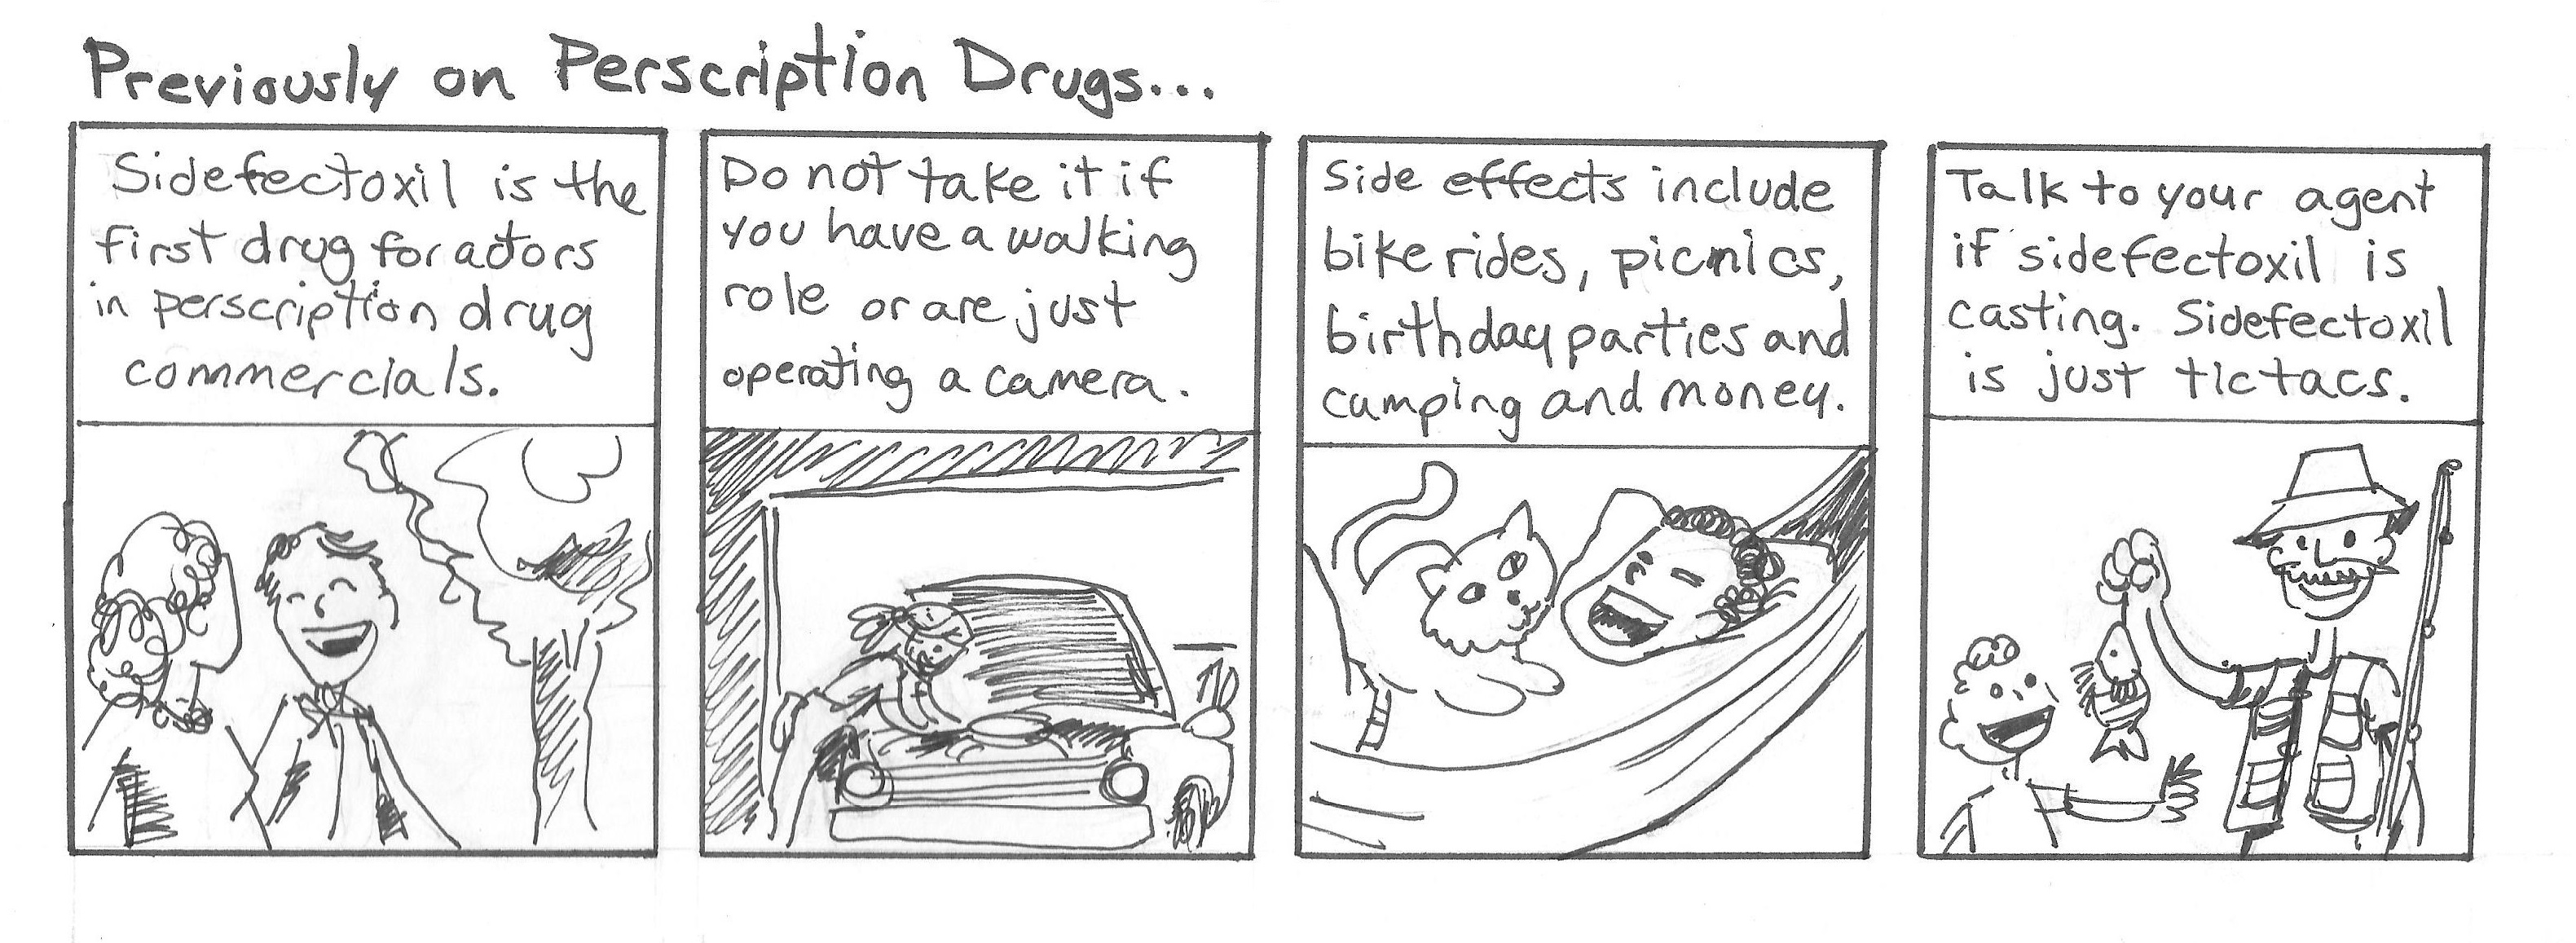 Previously on Prescription Drugs...